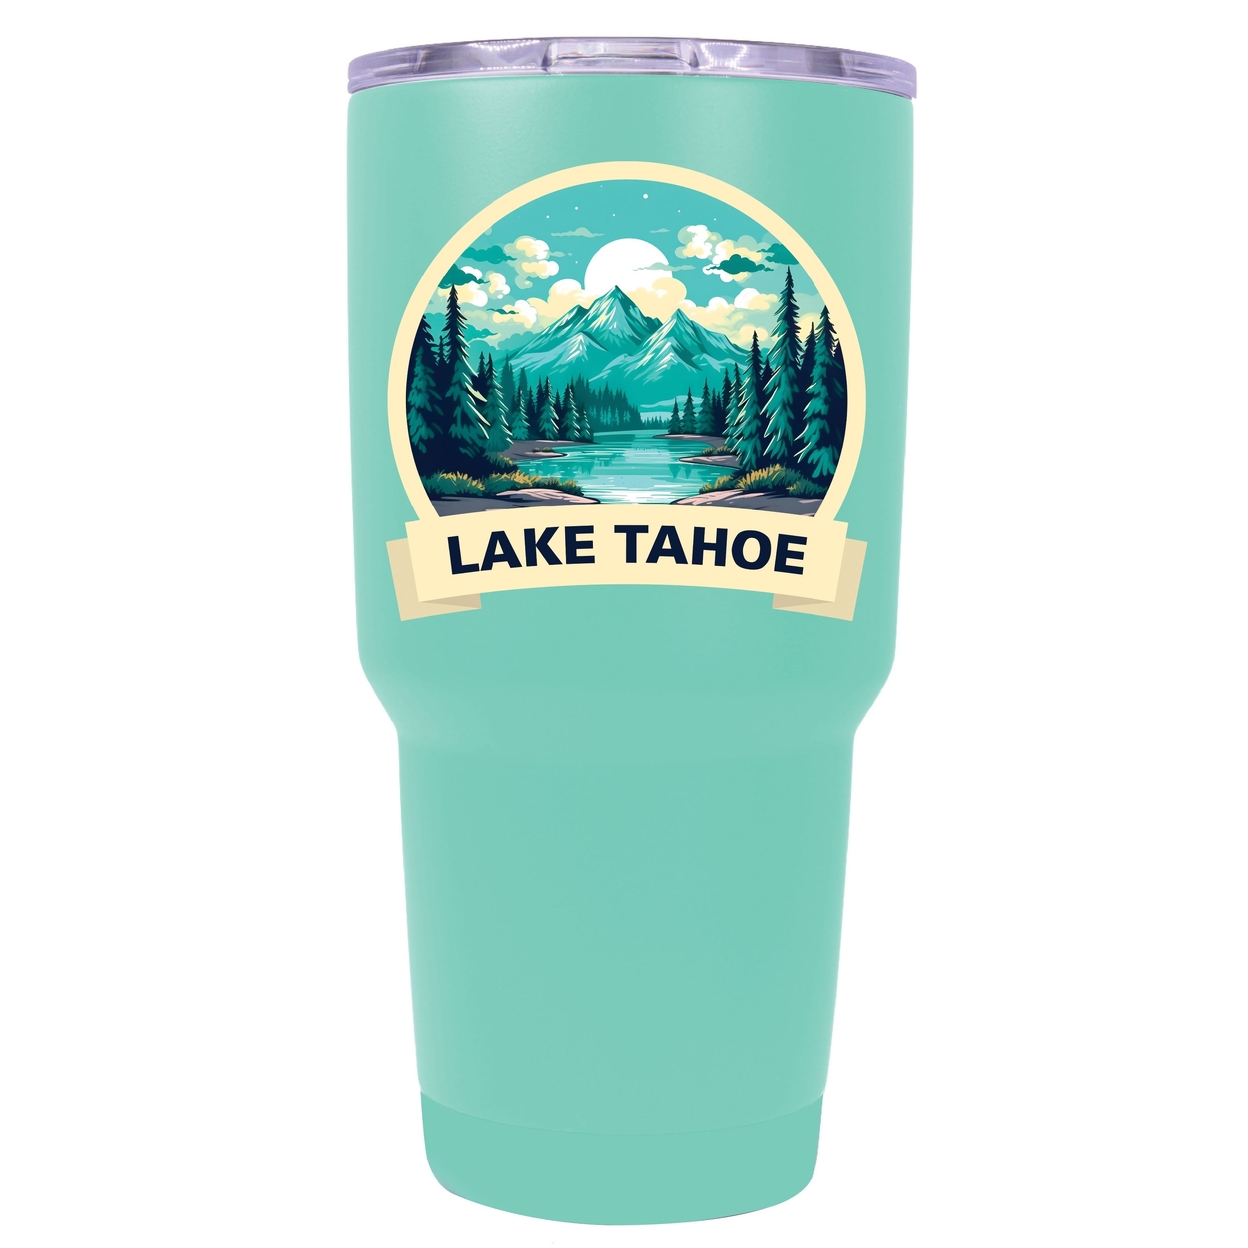 Lake Tahoe California Souvenir 24 Oz Insulated Stainless Steel Tumbler - Coral,,Single